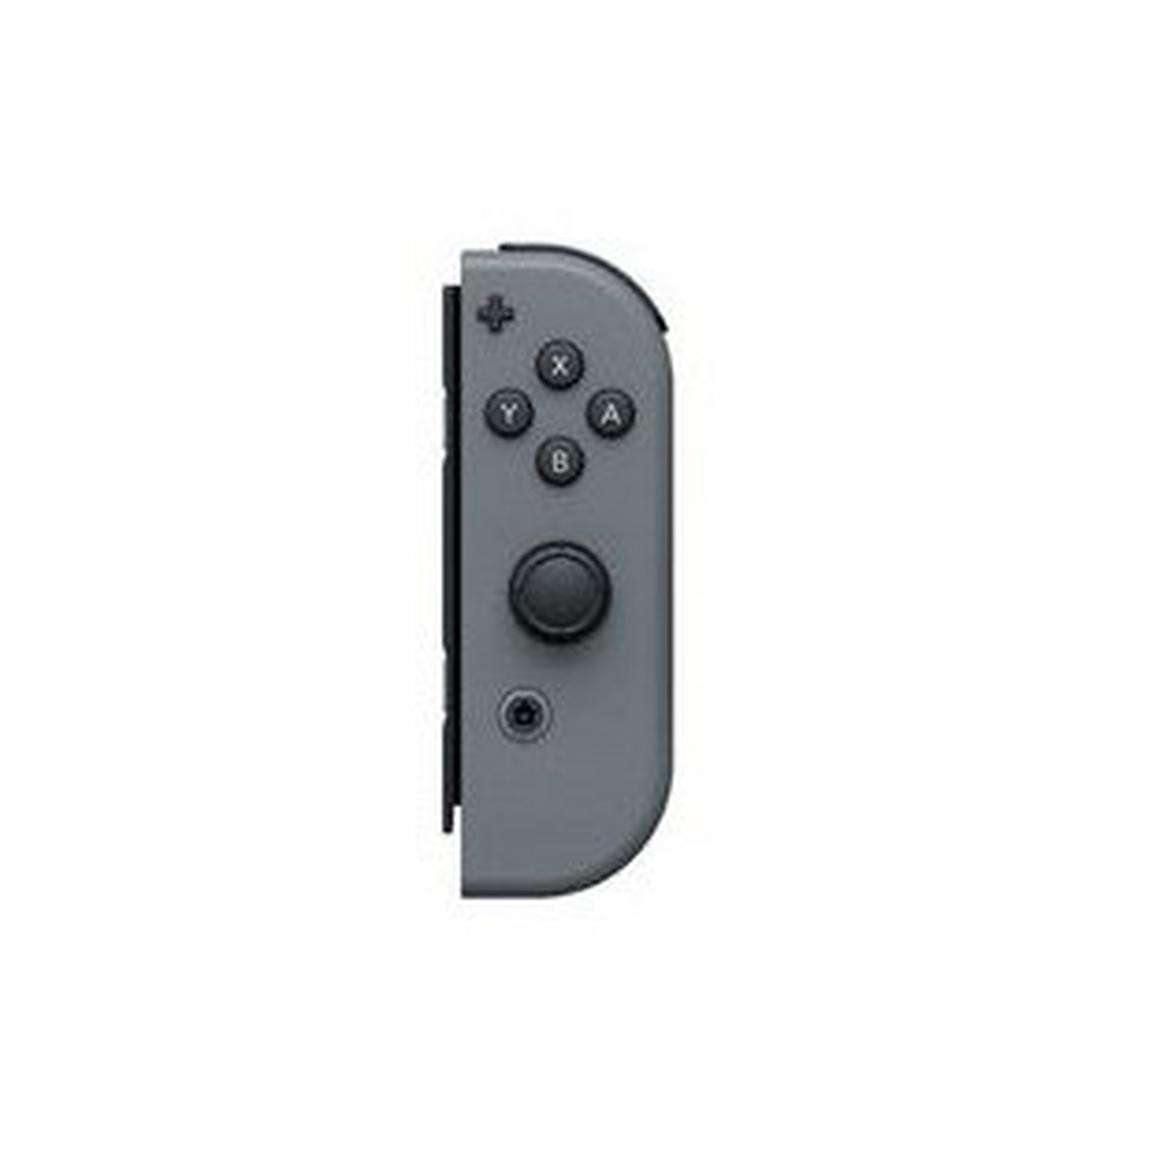 Nintendo Switch Joy-Con (R) Wireless Controller Gray Pre-Owned $22 @ GameStop $21.99